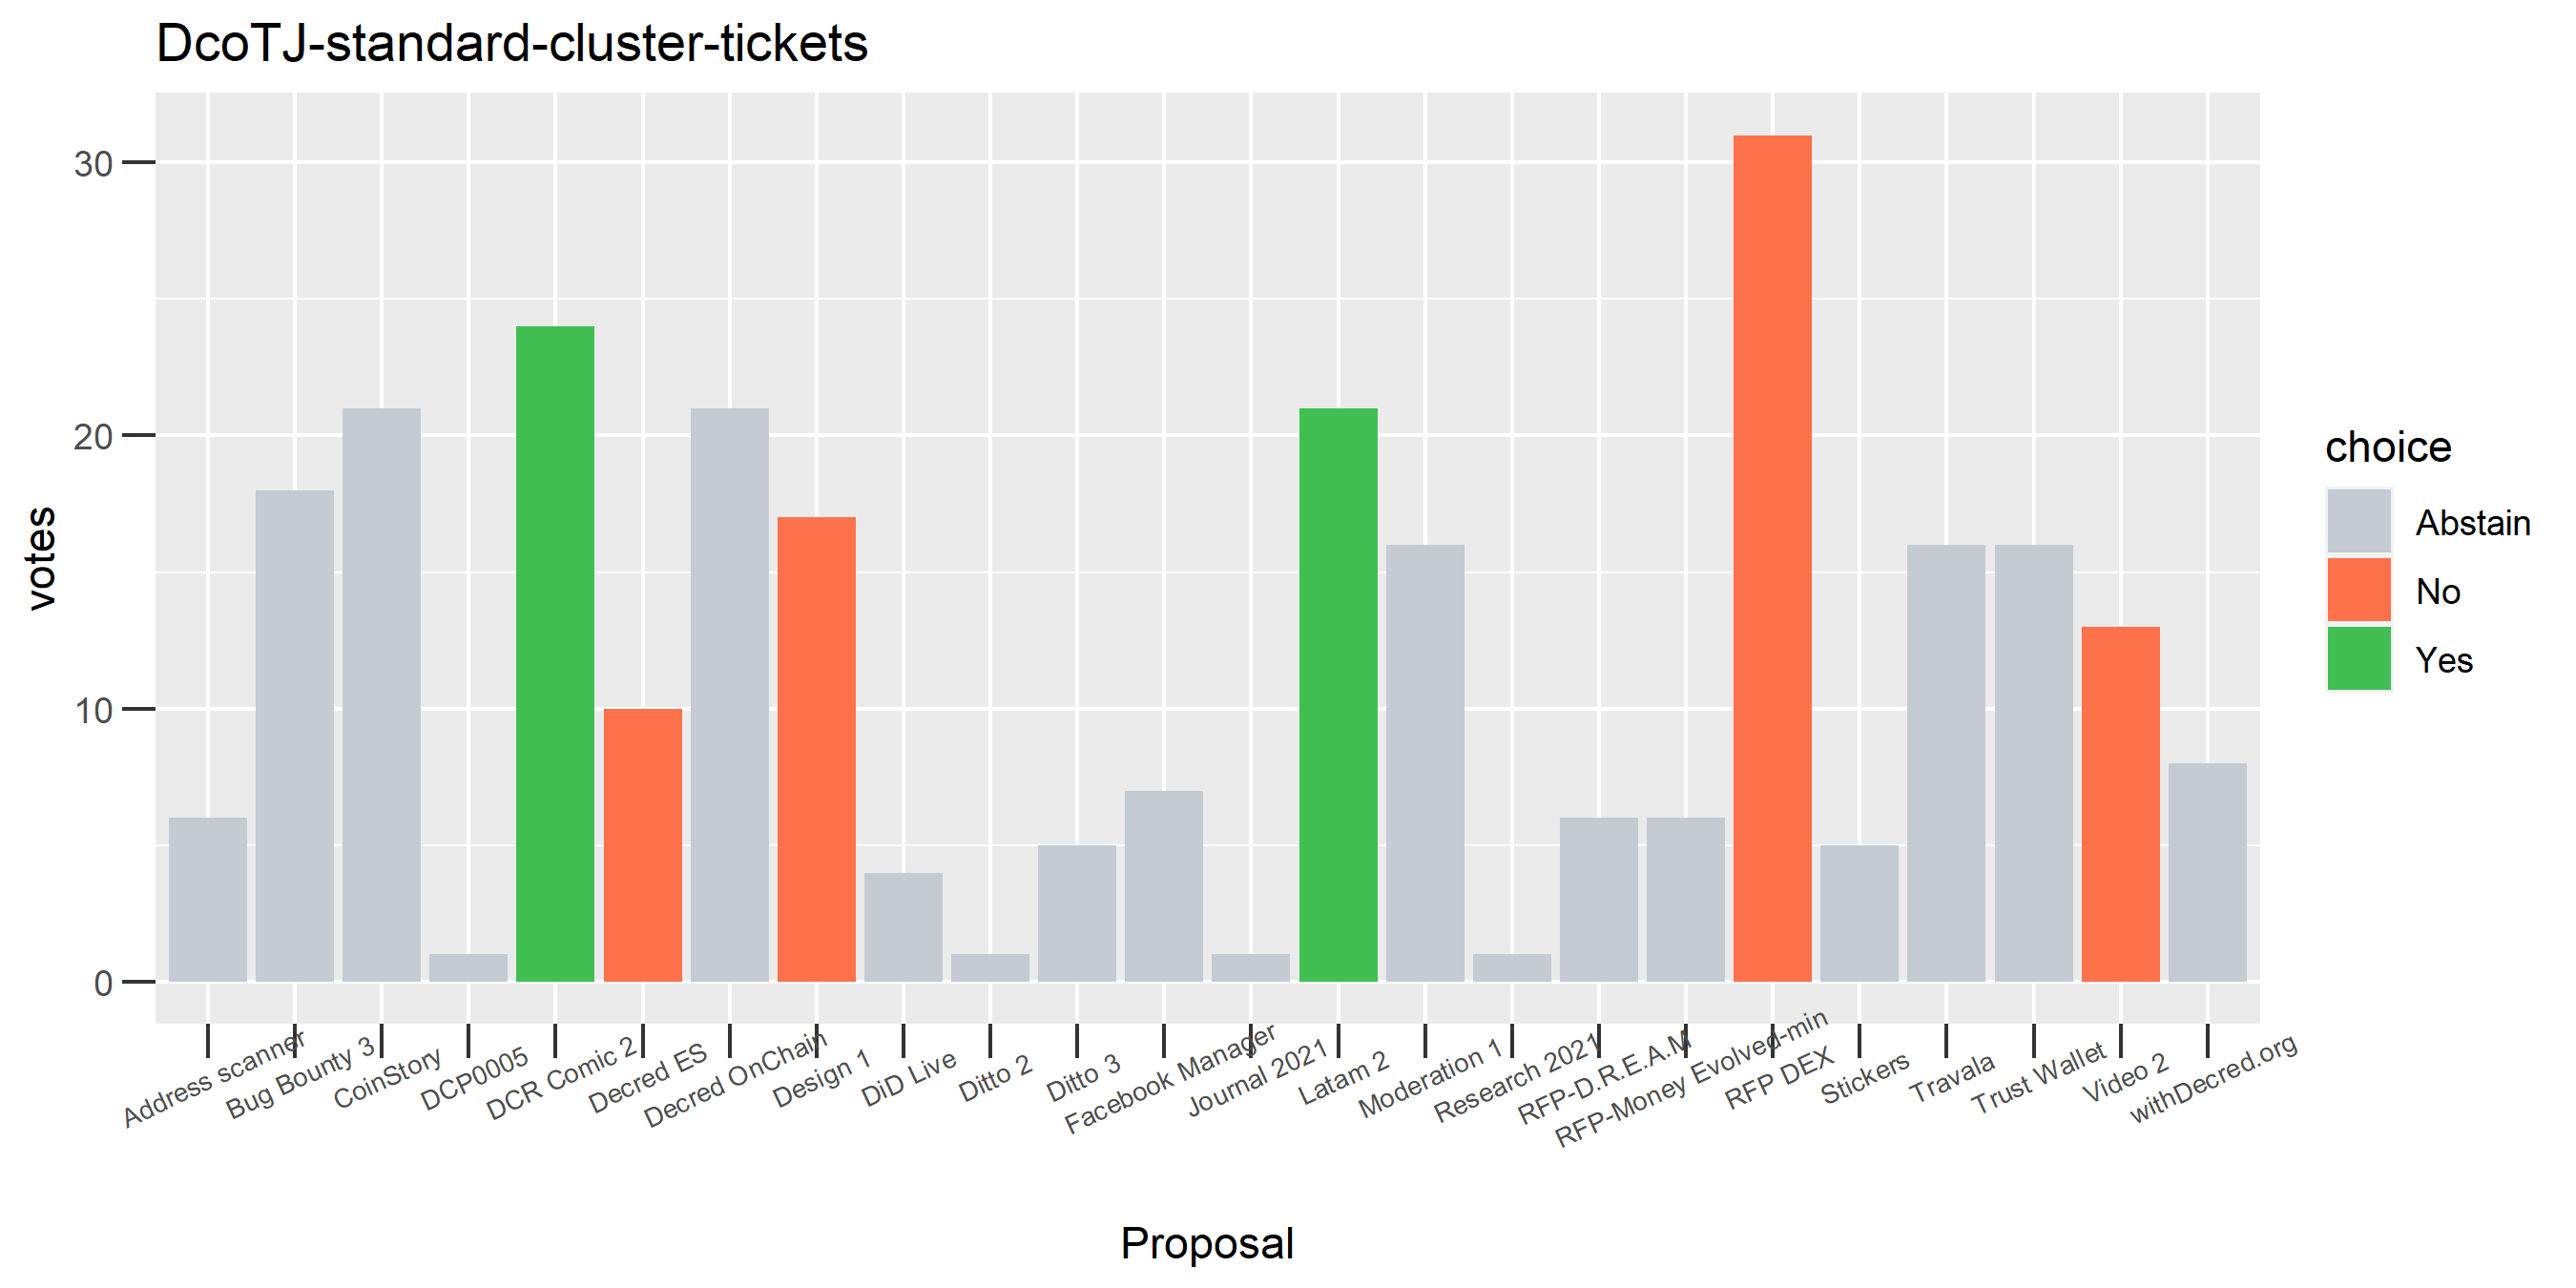 DcoTJ-standard-cluster-tickets